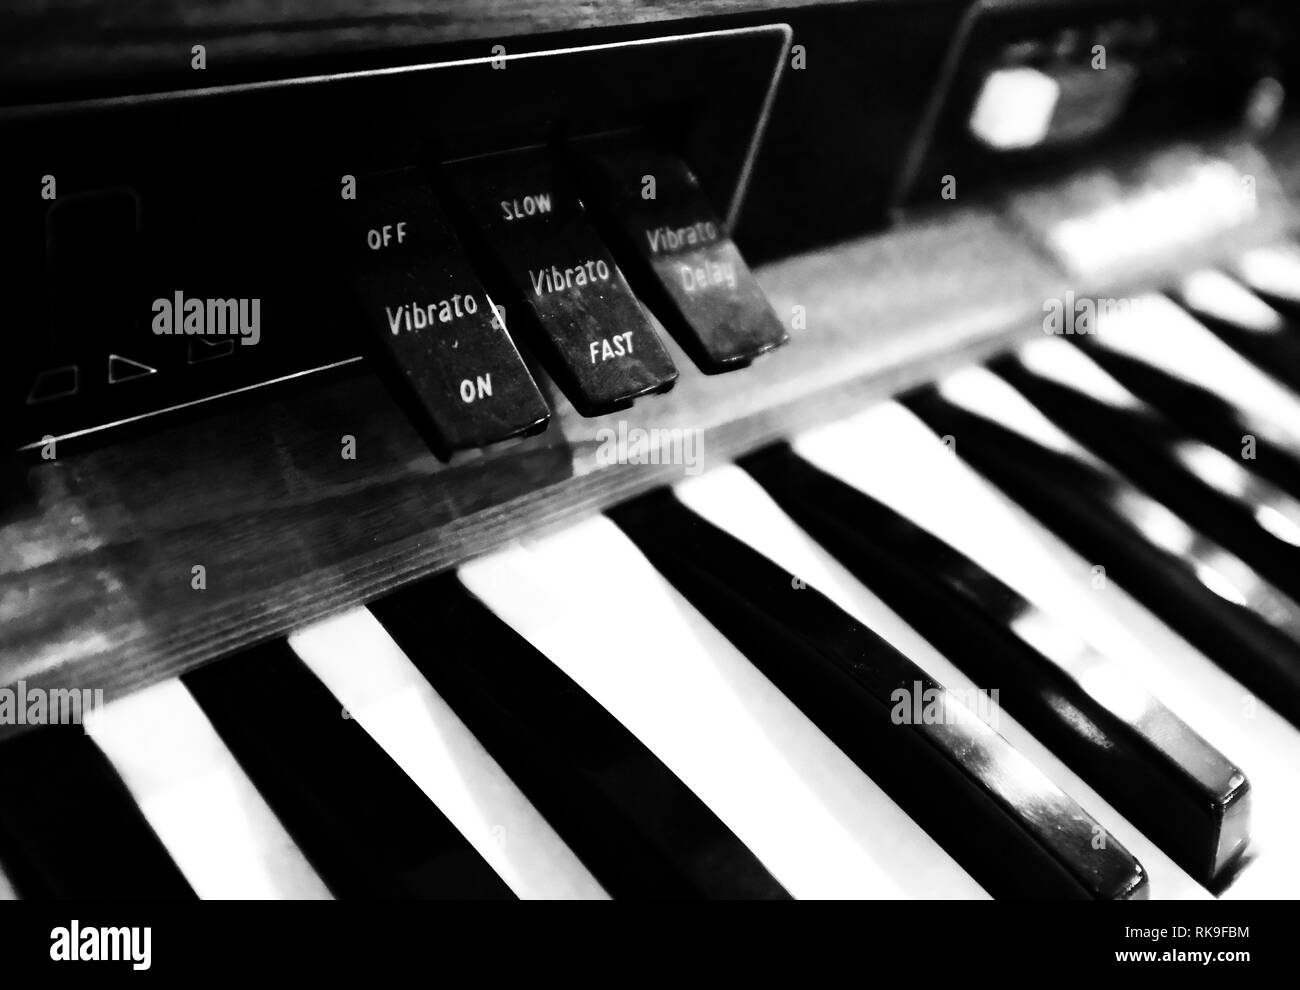 Farfisa Orgel Keyboard in einem professionellen Tonstudio Stockfoto